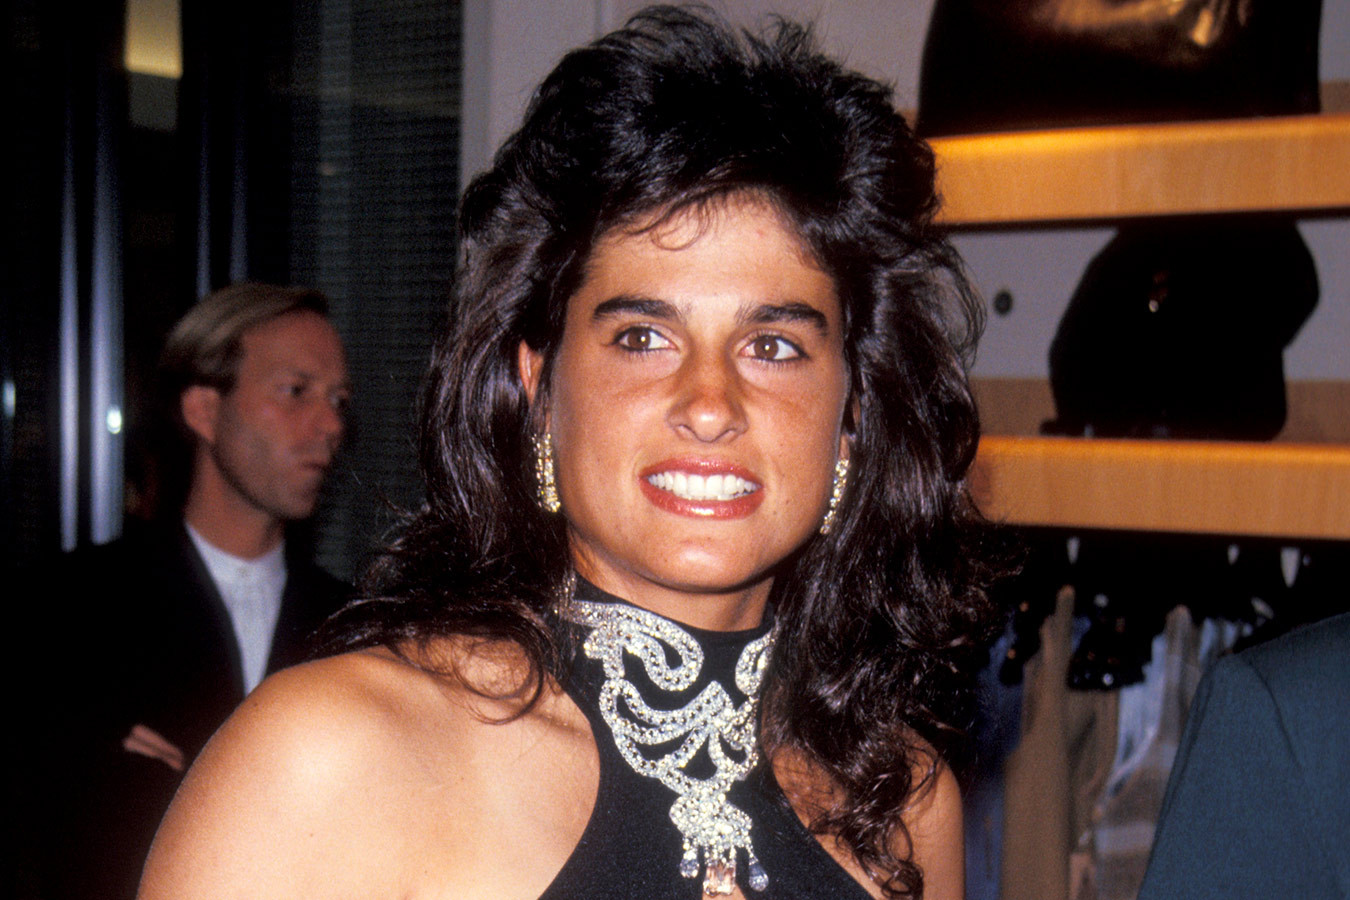 Аргентинская красавица из 90-х. Как сейчас выглядит Габриэла Сабатини